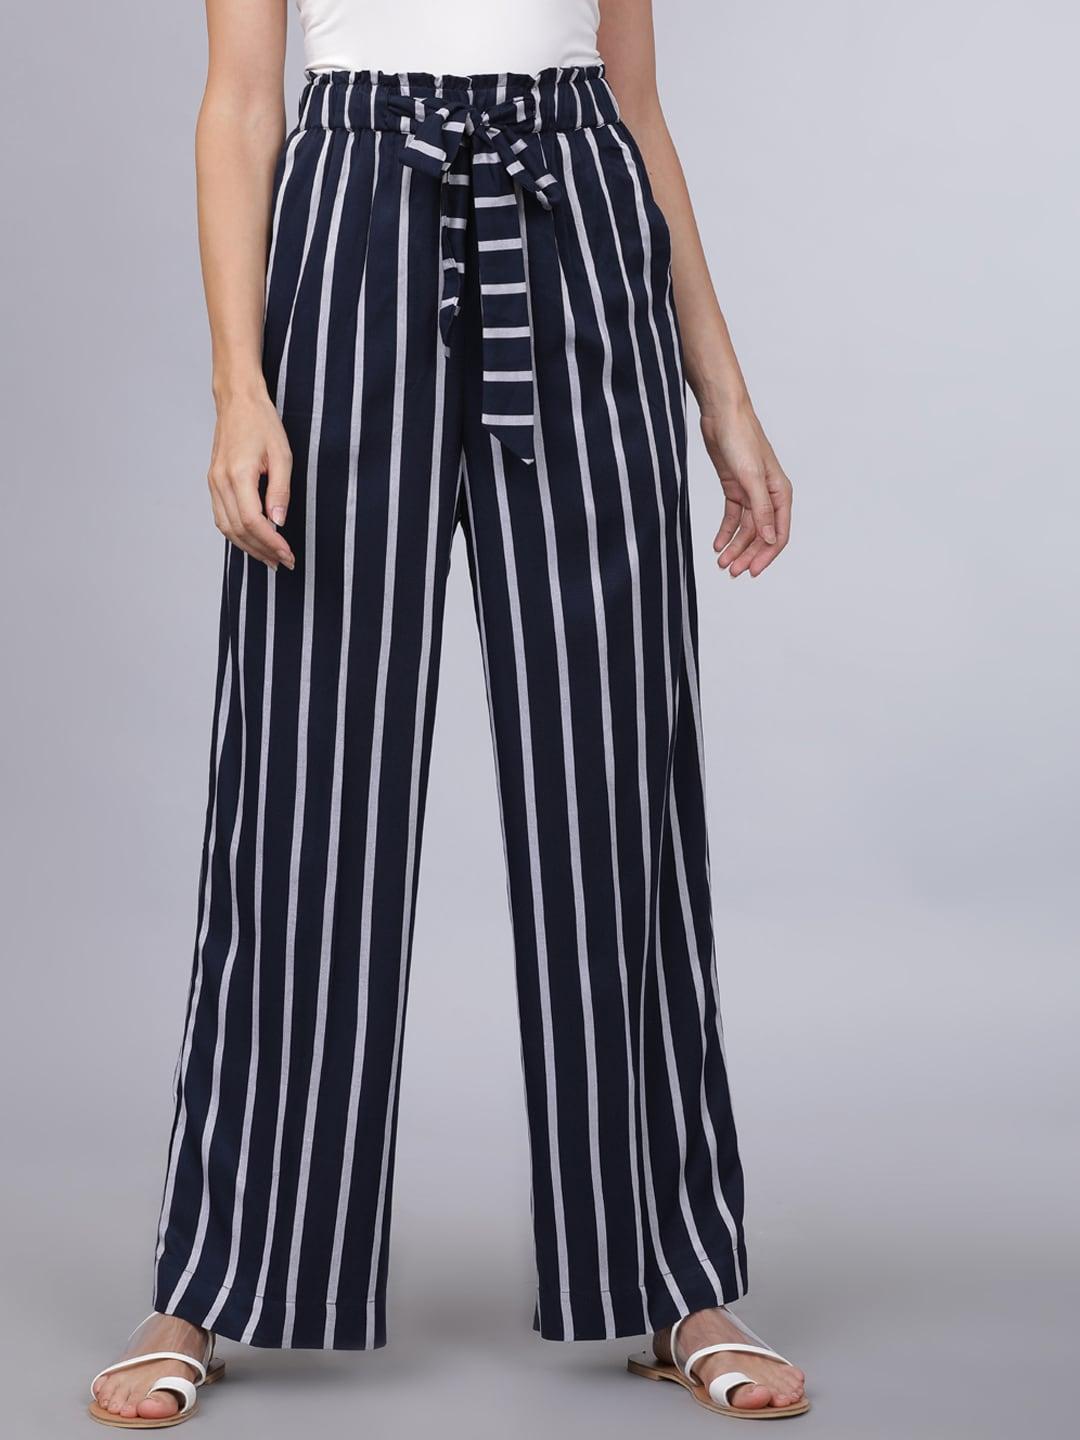 tokyo talkies women navy blue & white striped parallel trousers